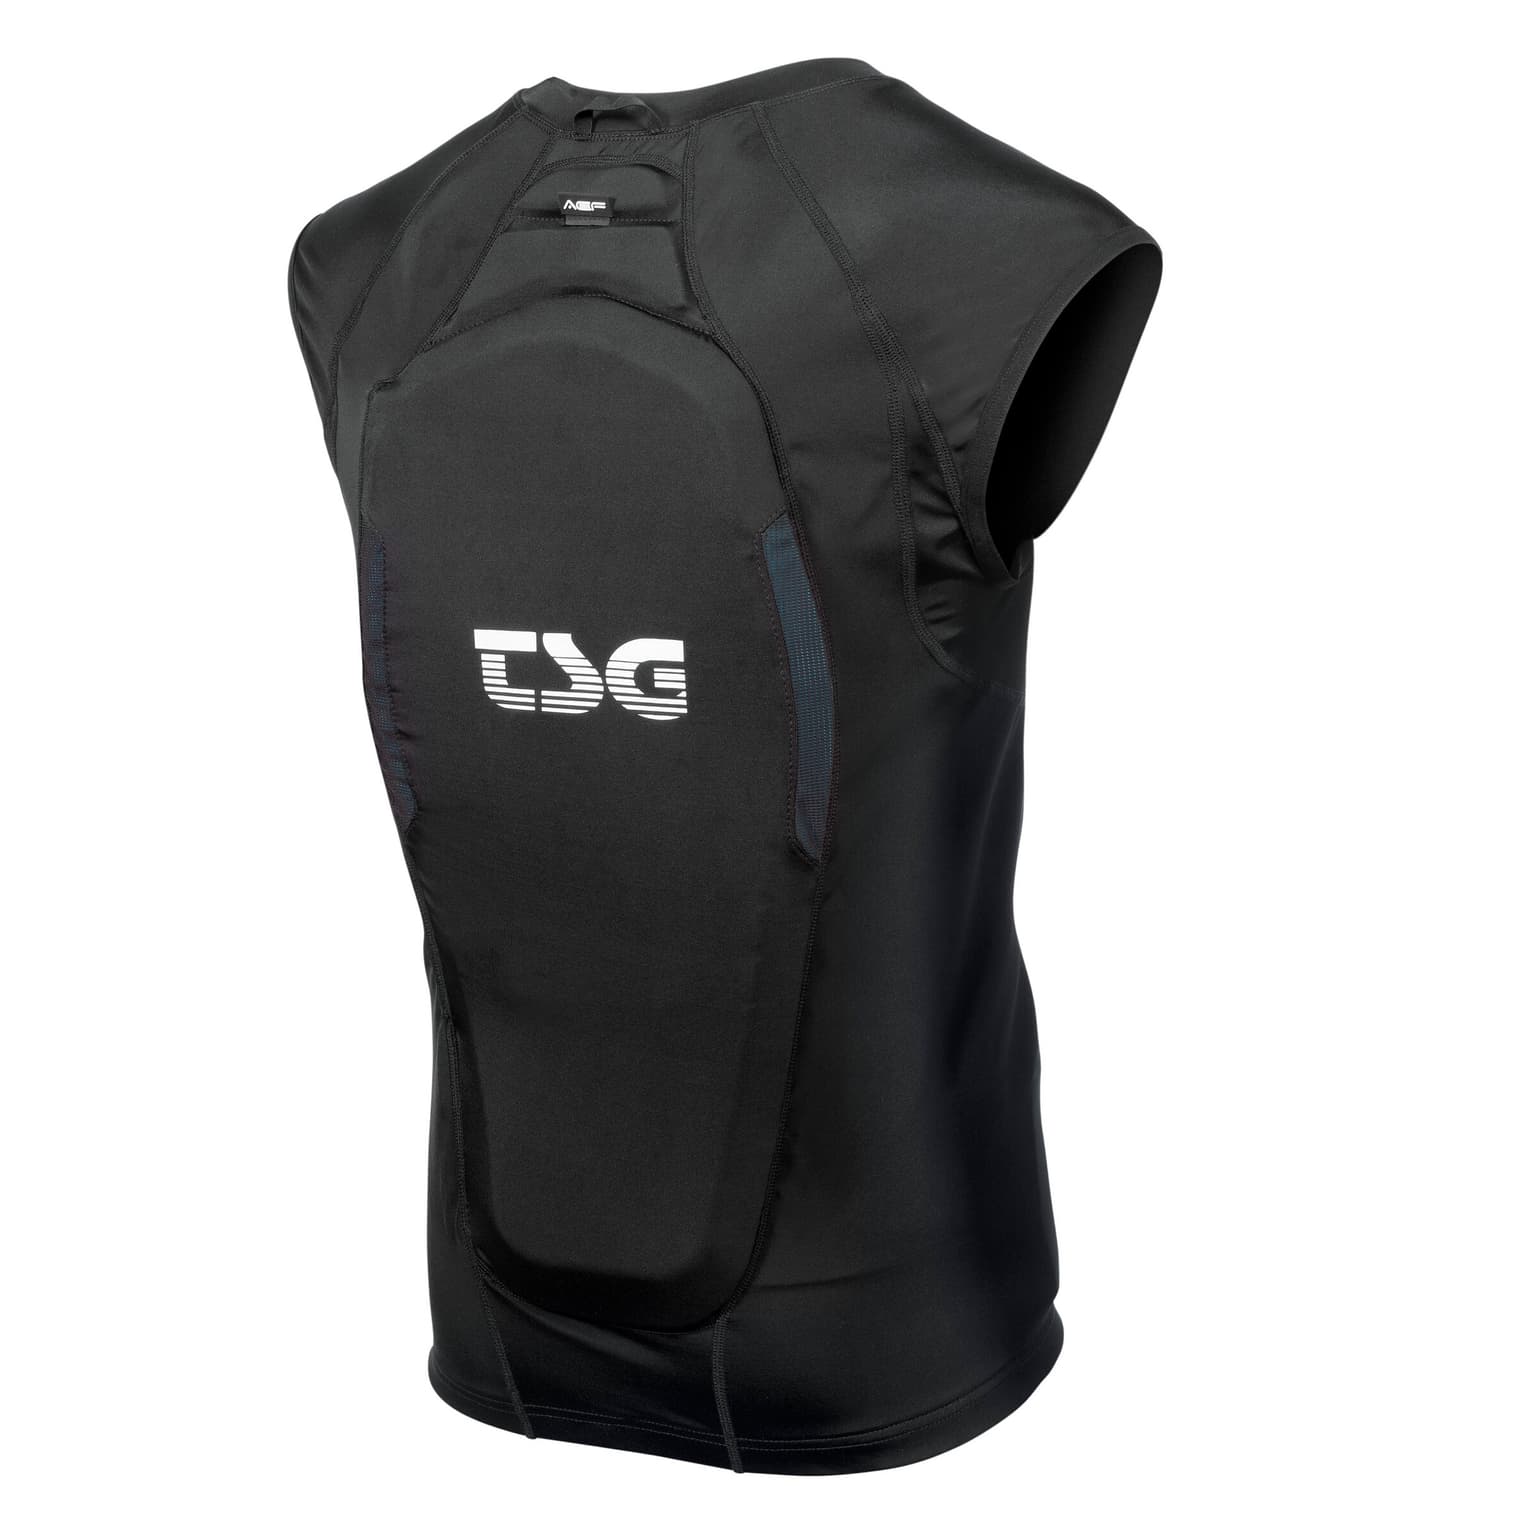 Tsg Tsg Backbone Vest A Protections noir 2